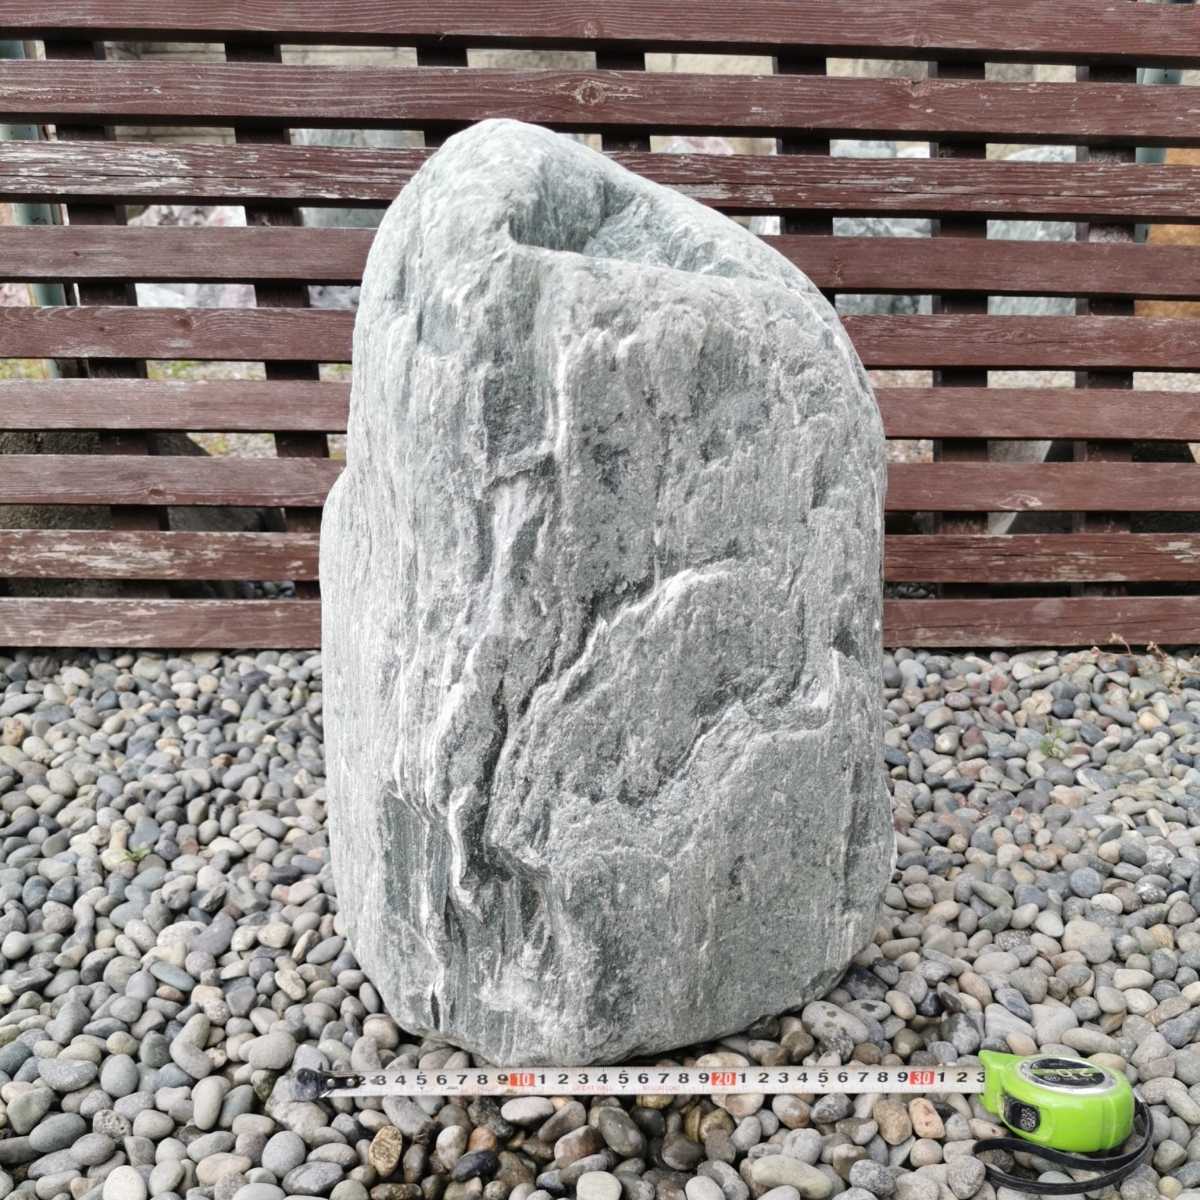  three wave stone 33.2 kilo garden stone appreciation stone stone tray stone suiseki st light . garden tsubo garden bonsai gardening ornament objet d'art interior gravel 